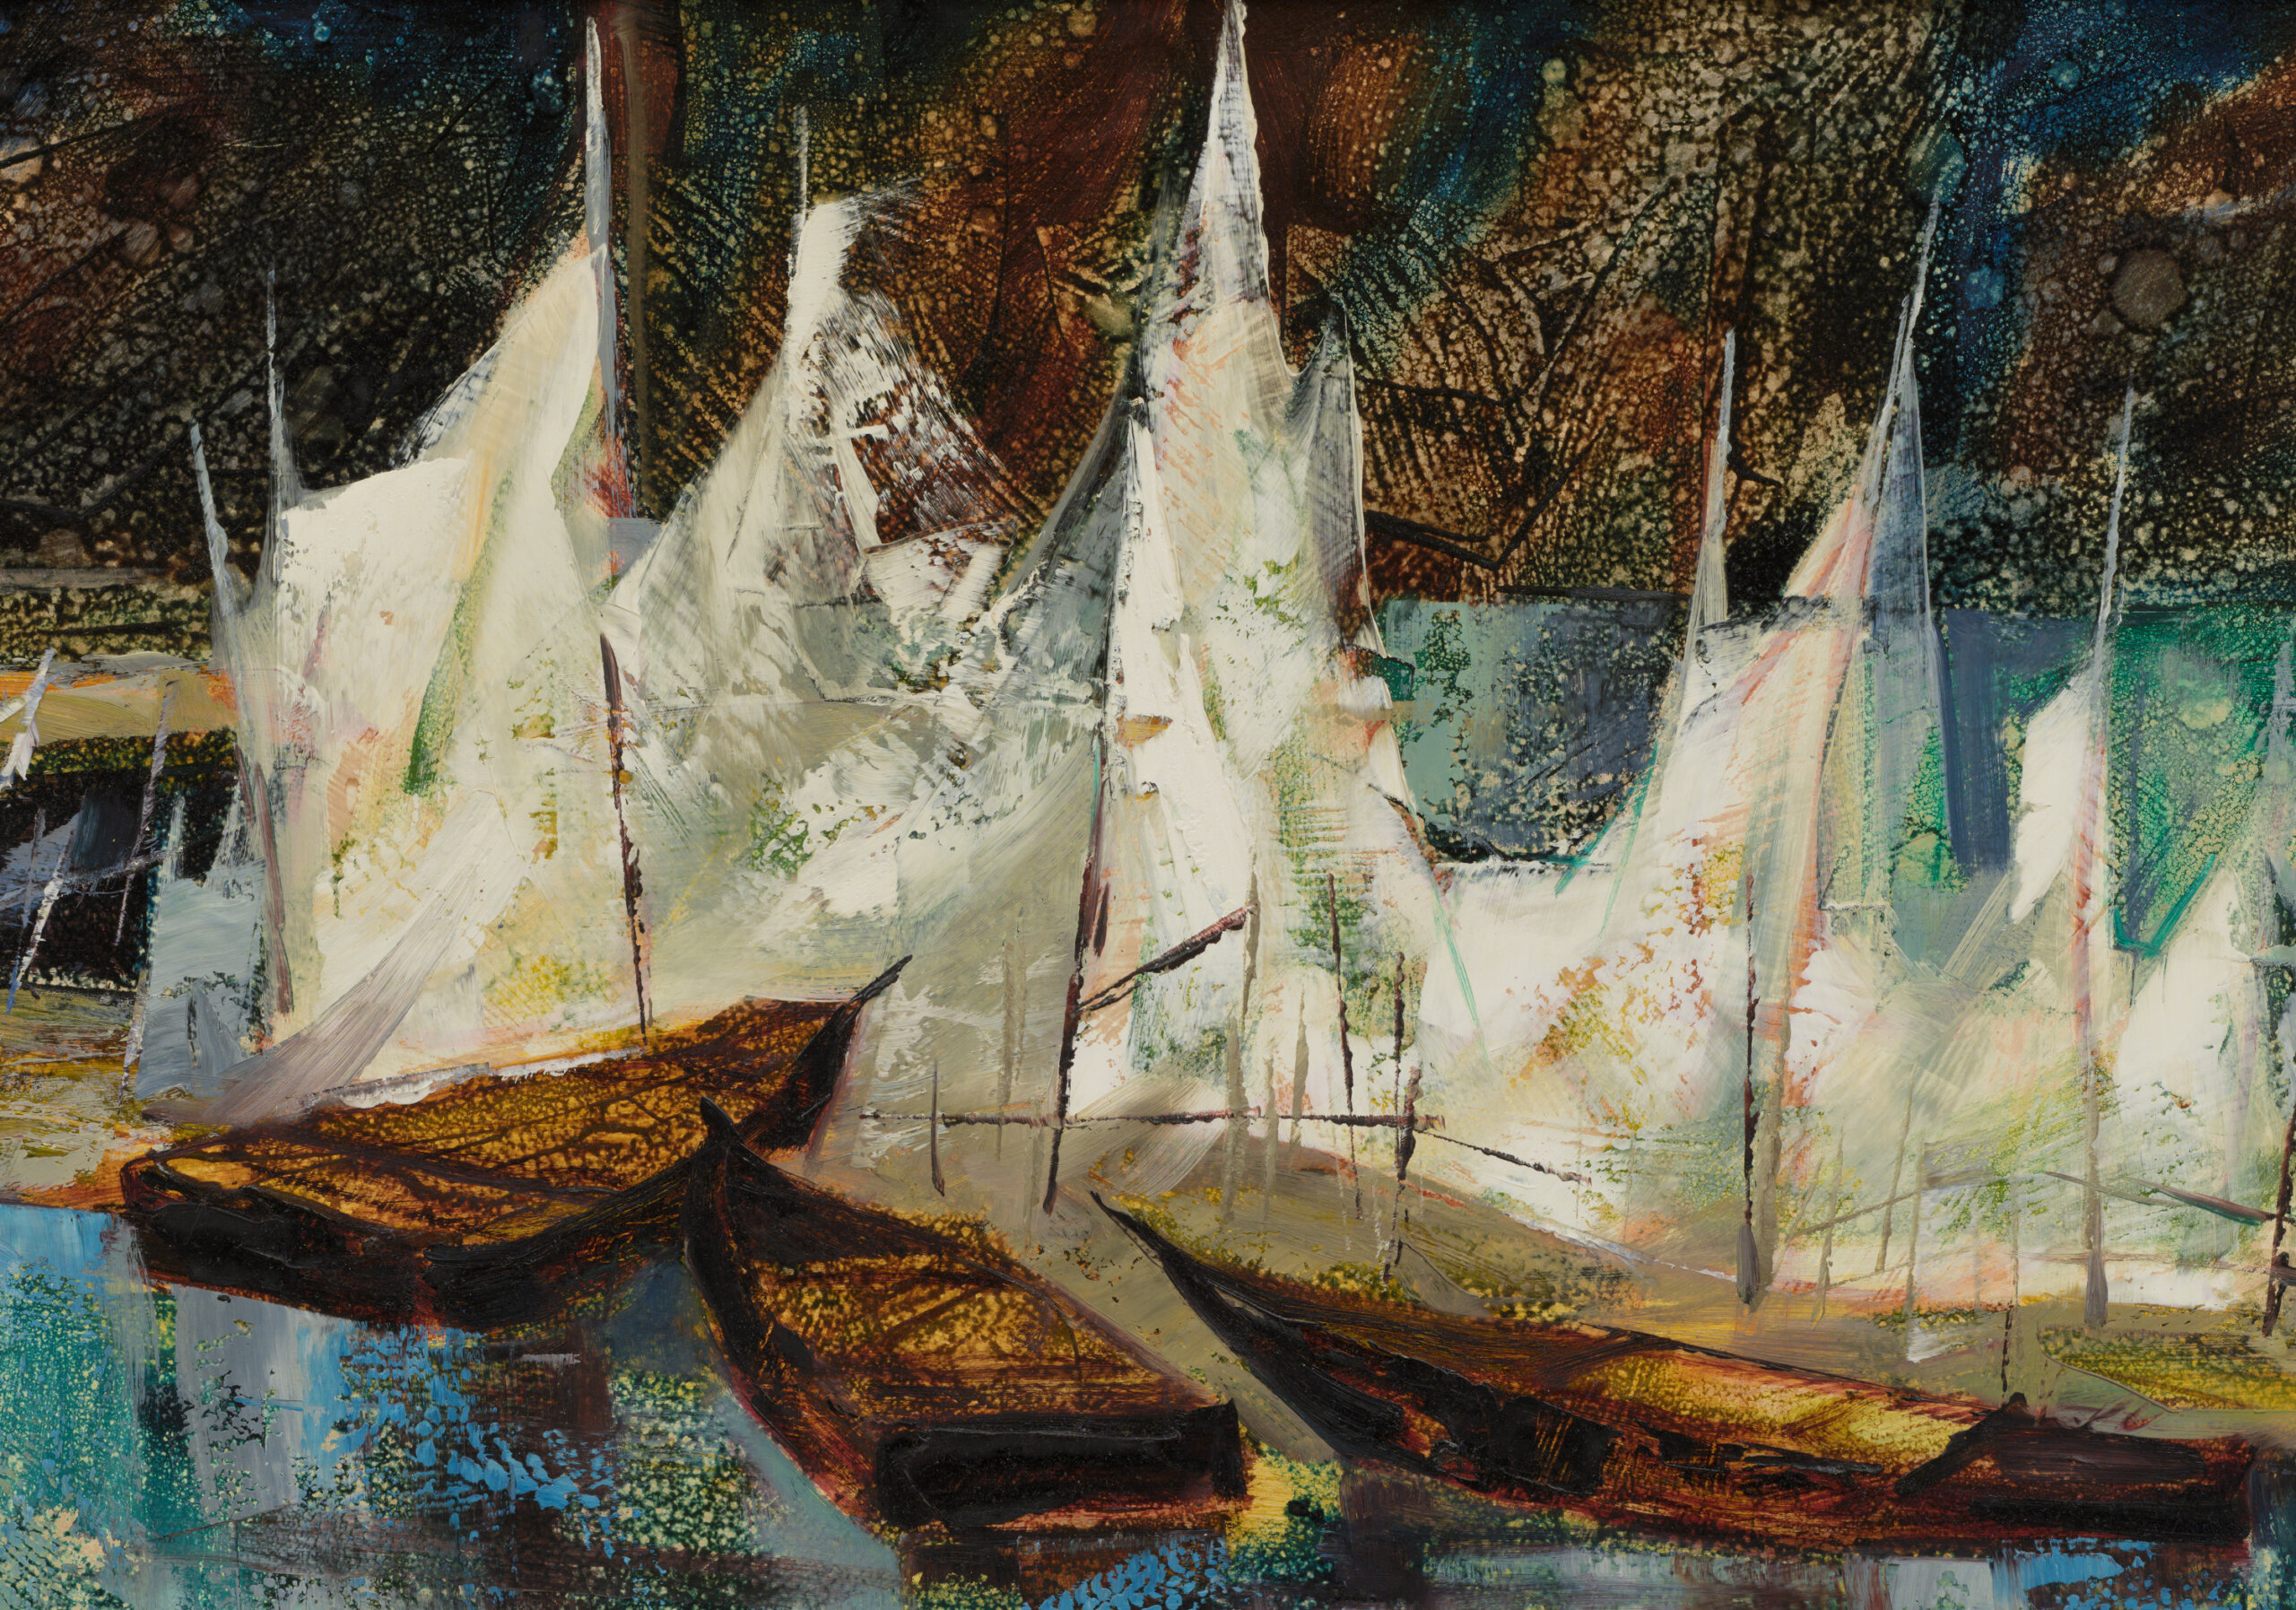 Joann Saarniit “Valged purjed”, 1966, 50 x 91 cm.